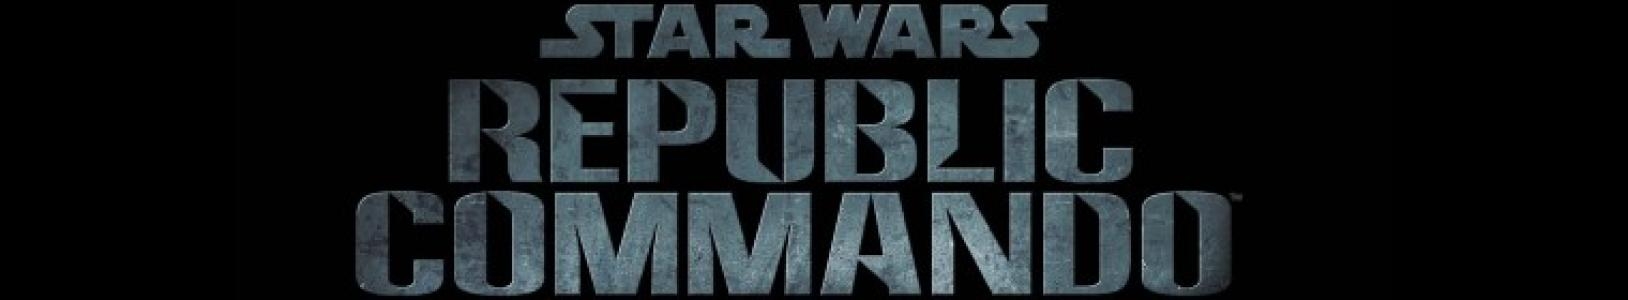 Star Wars: Republic Commando banner